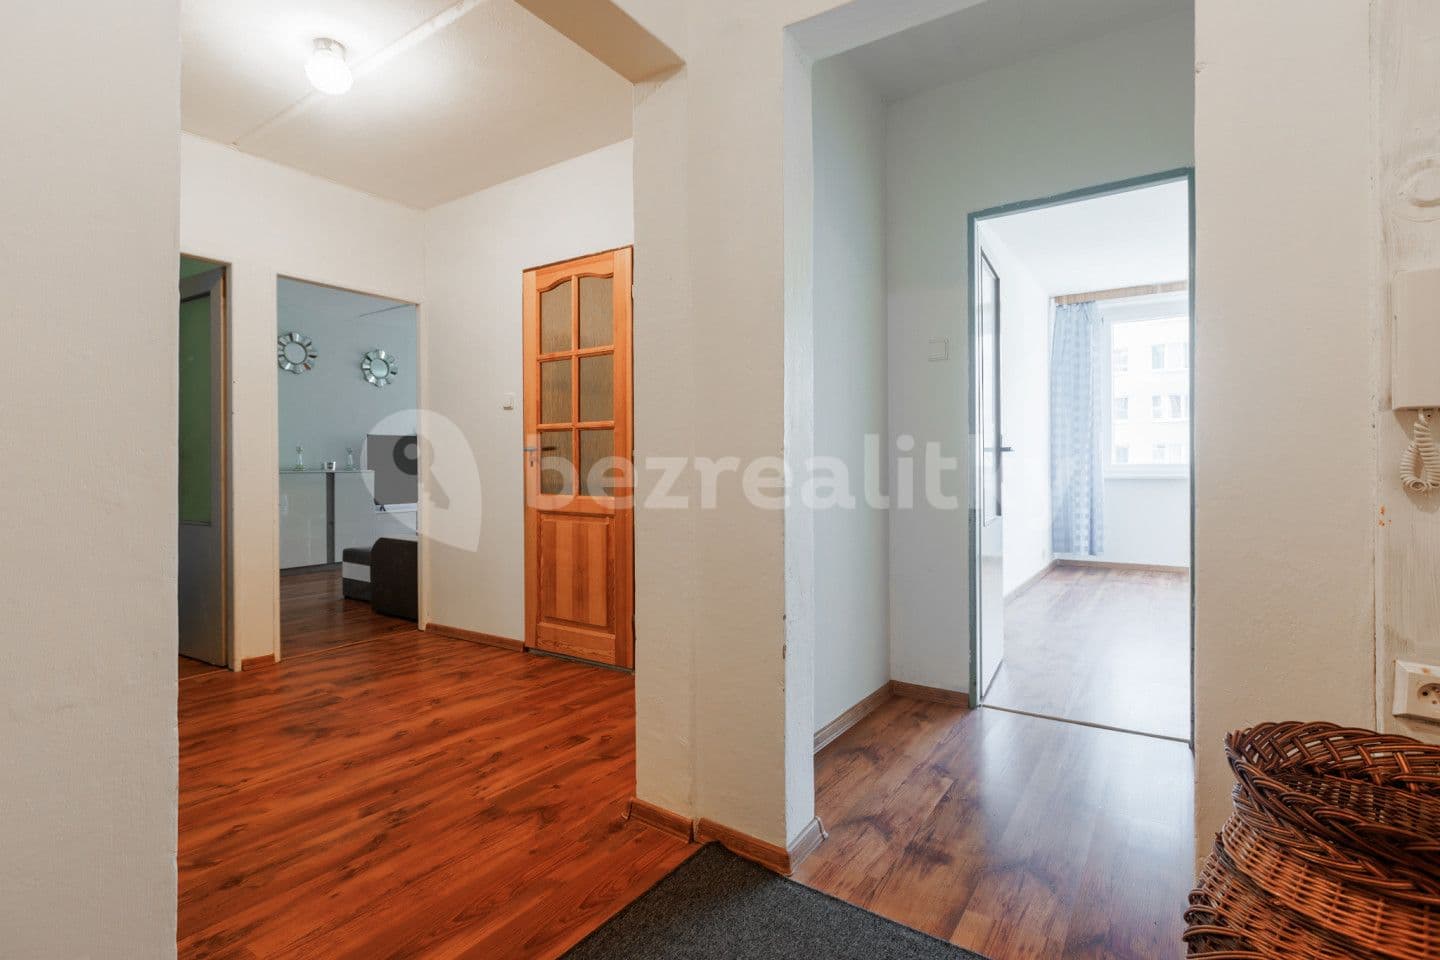 4 bedroom flat for sale, 82 m², Luční, Litvínov, Ústecký Region